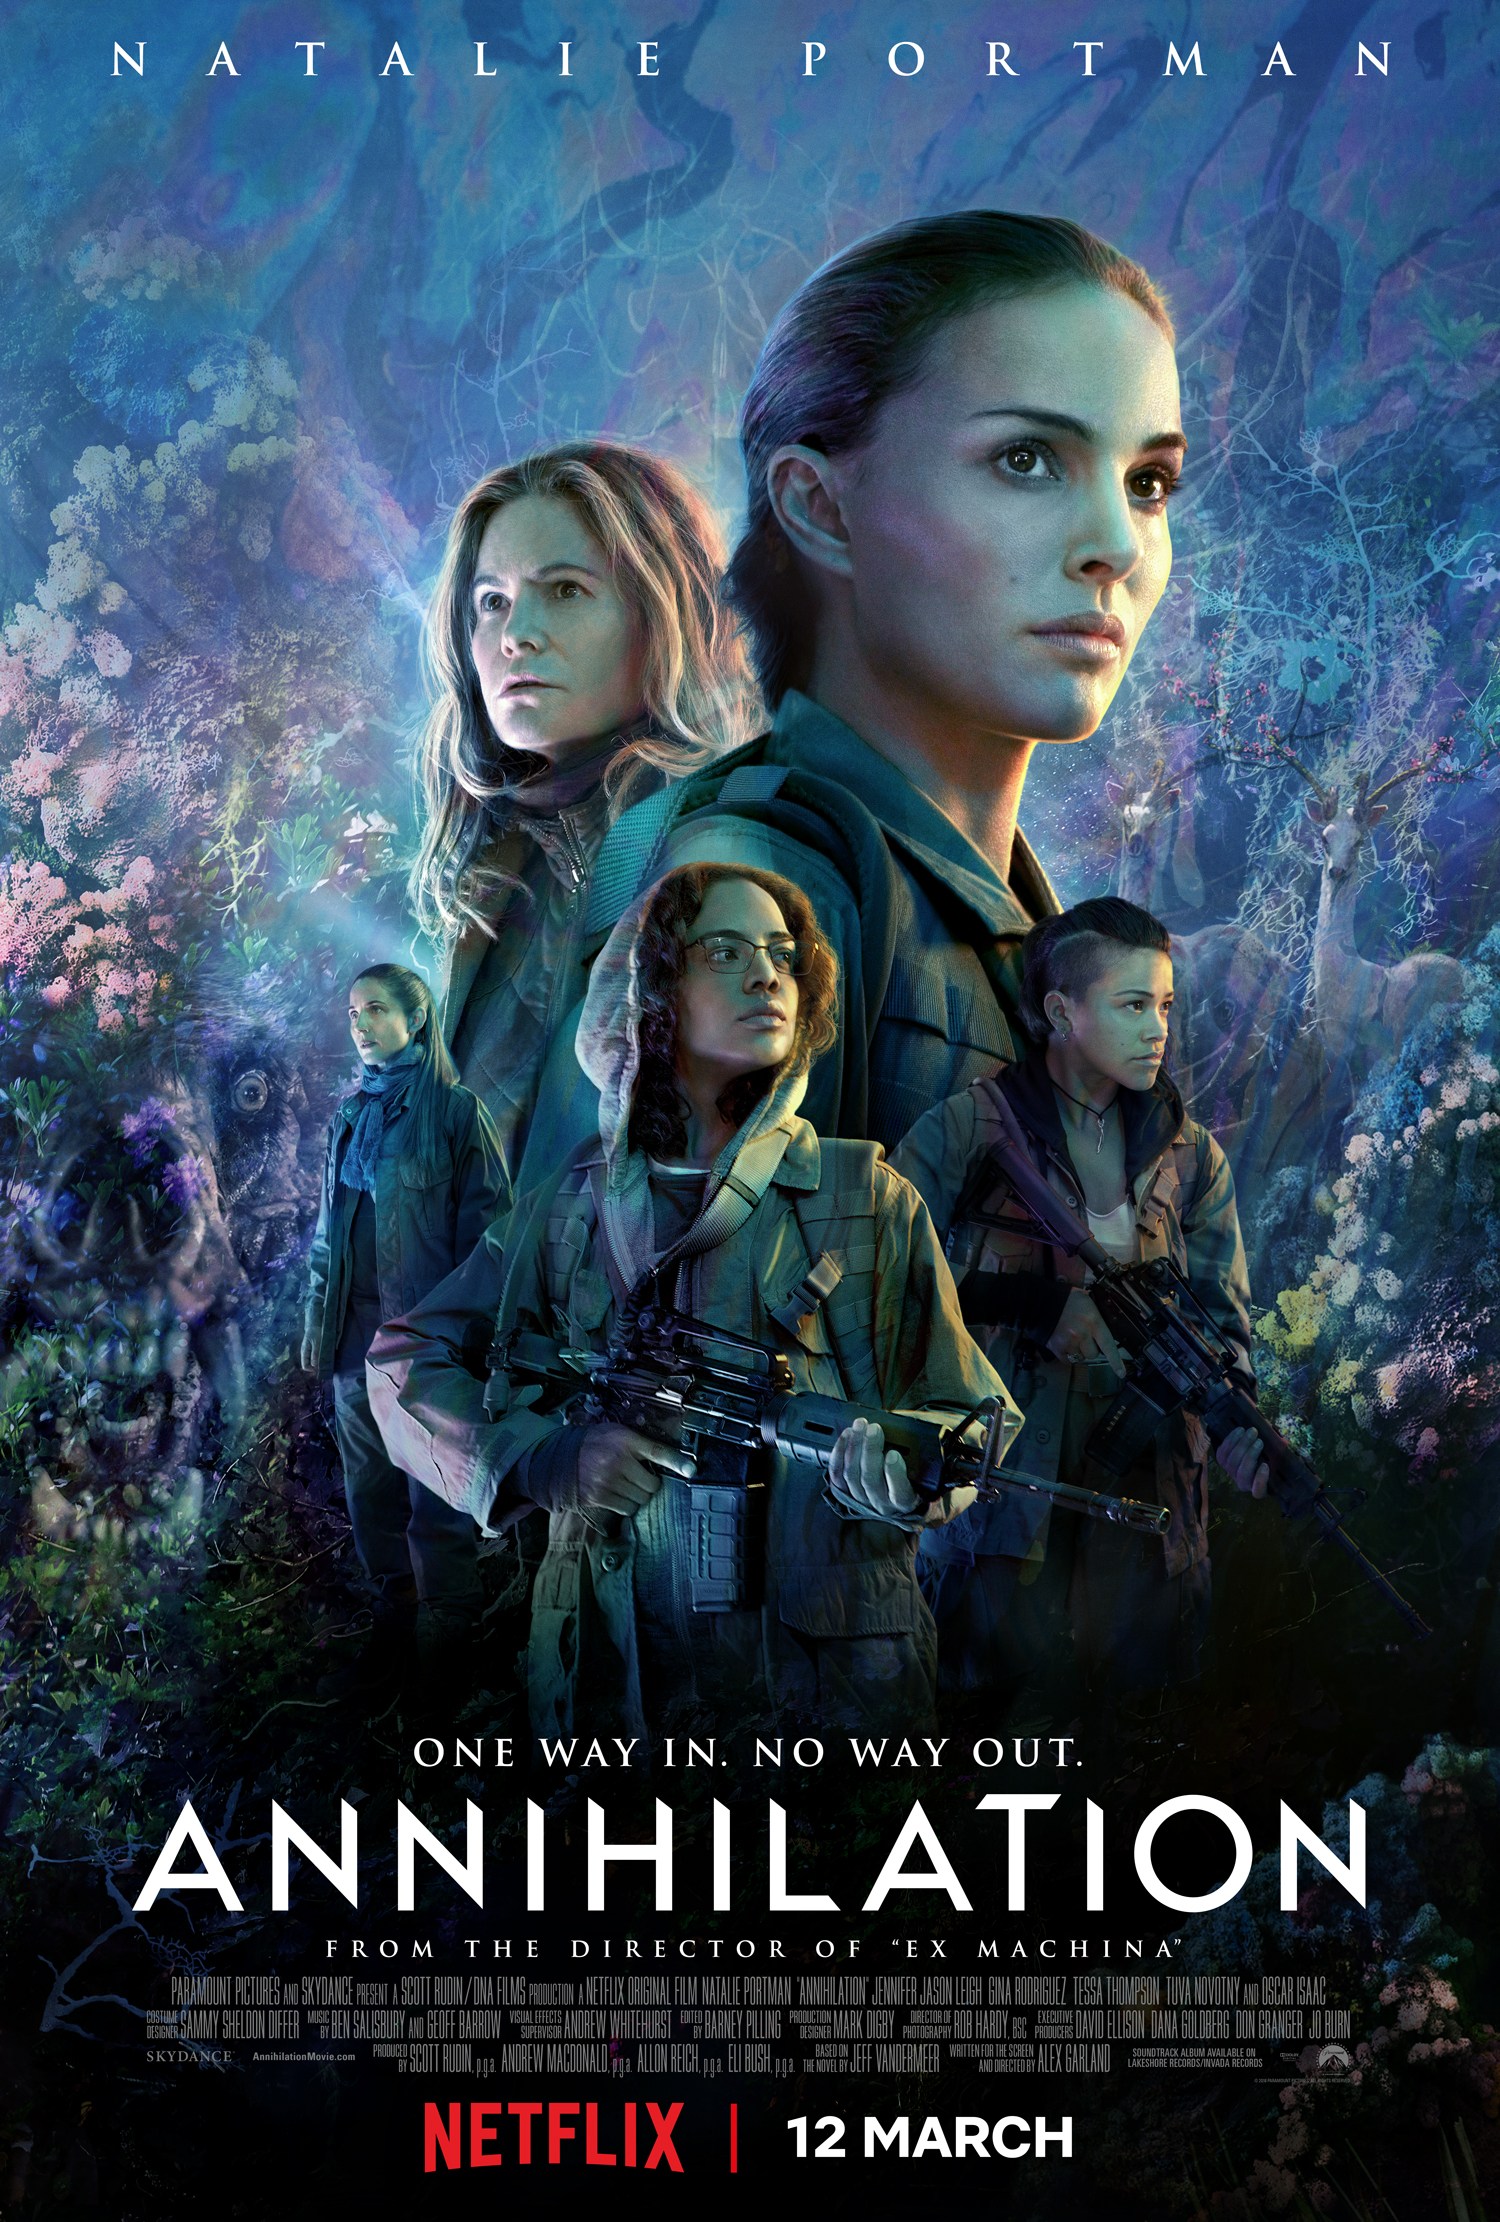 Natalie Portman images Annihilation poster HD wallpaper and